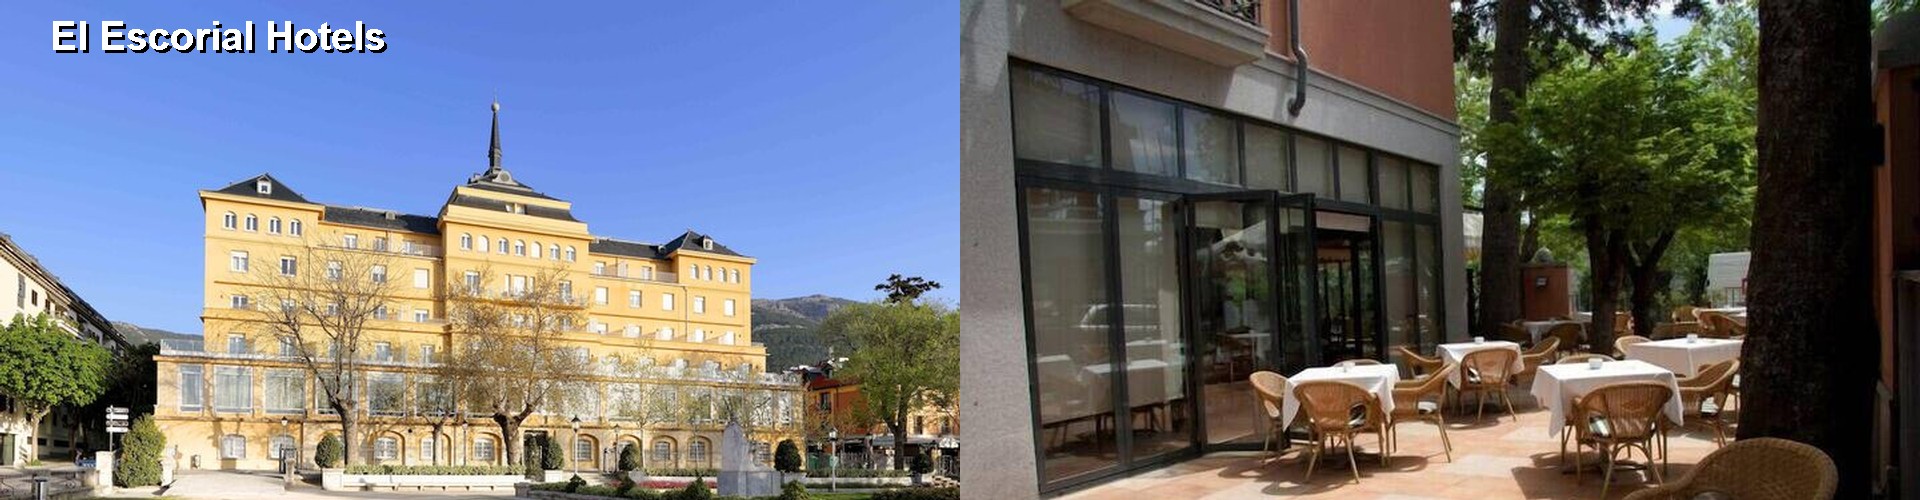 5 Best Hotels near El Escorial